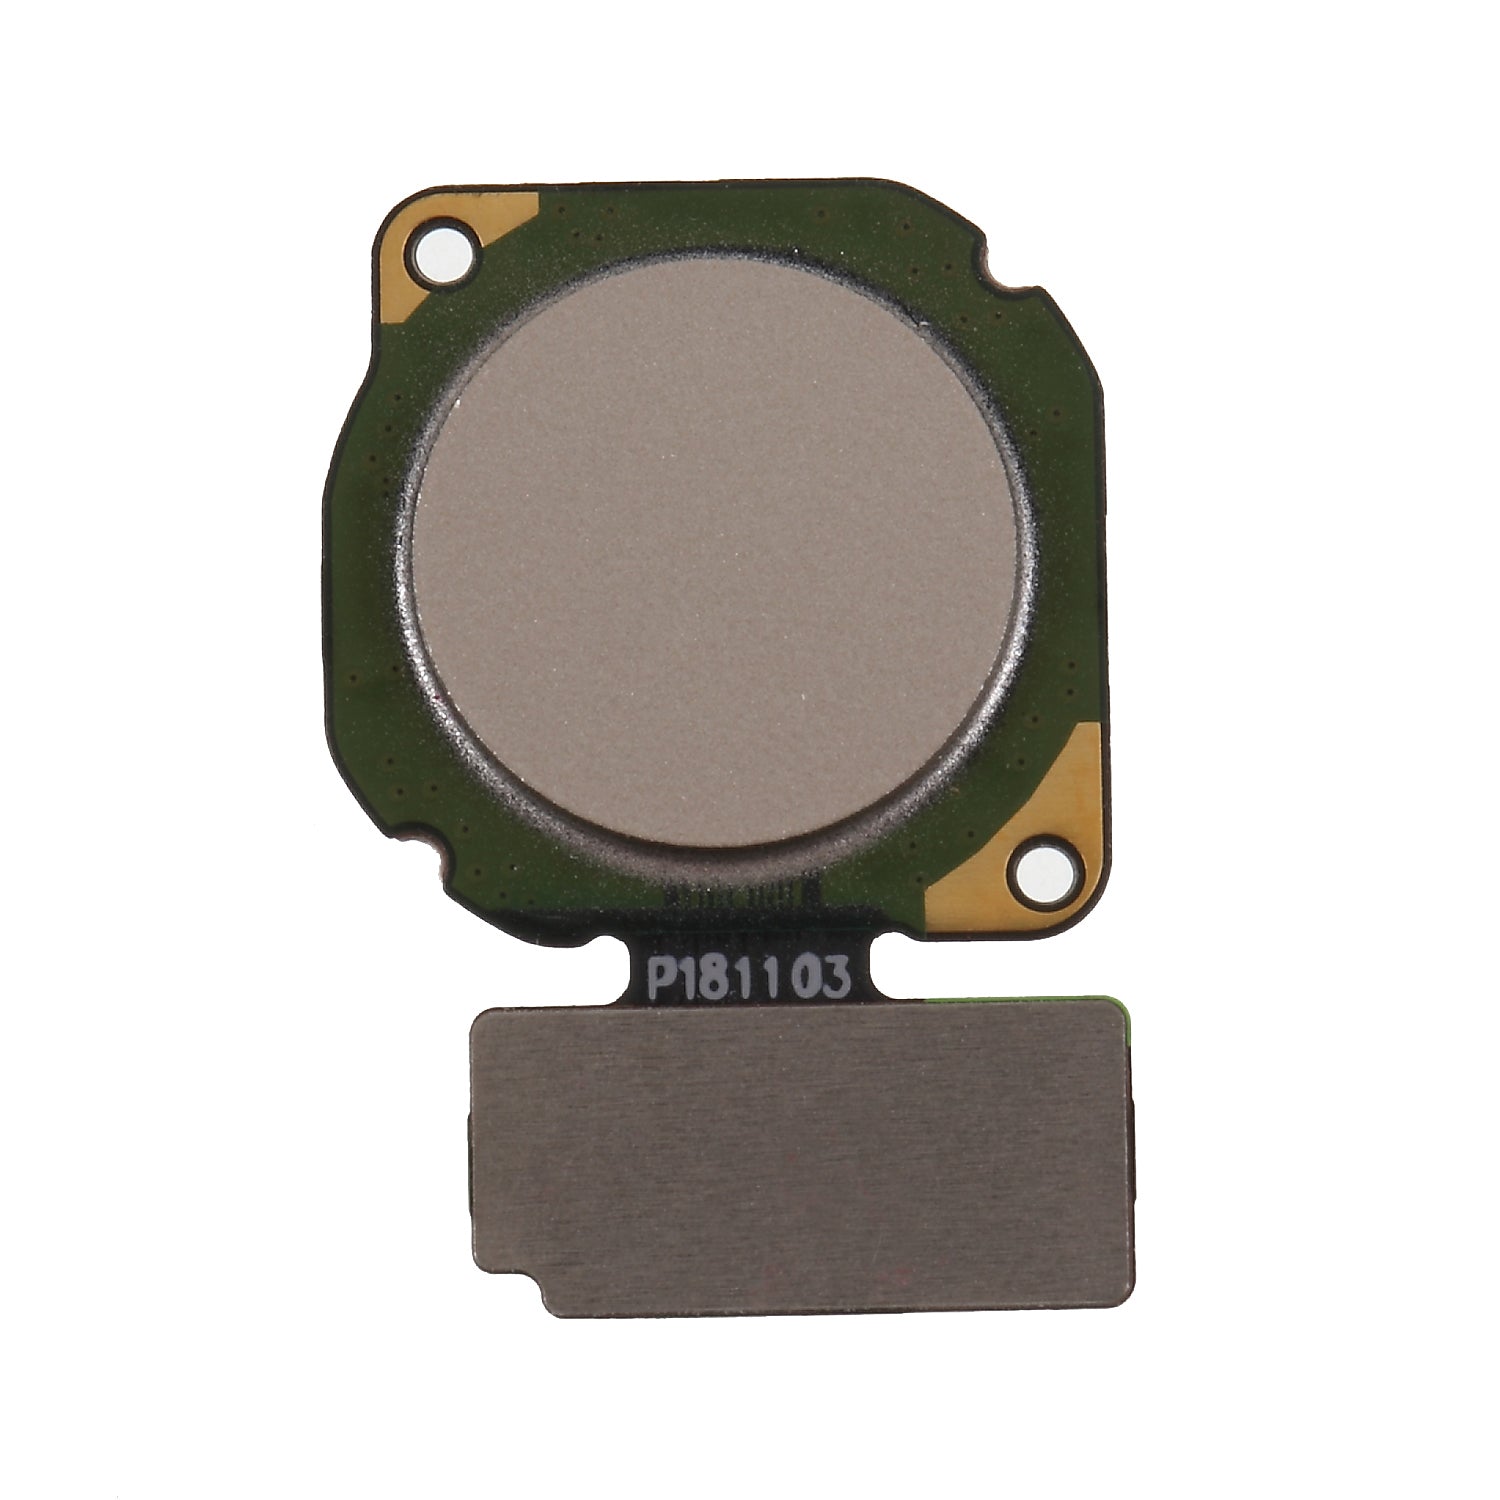 OEM Home Key Fingerprint Button Flex Cable Part for Huawei P20 Lite / Nova 3e (China) - Silver